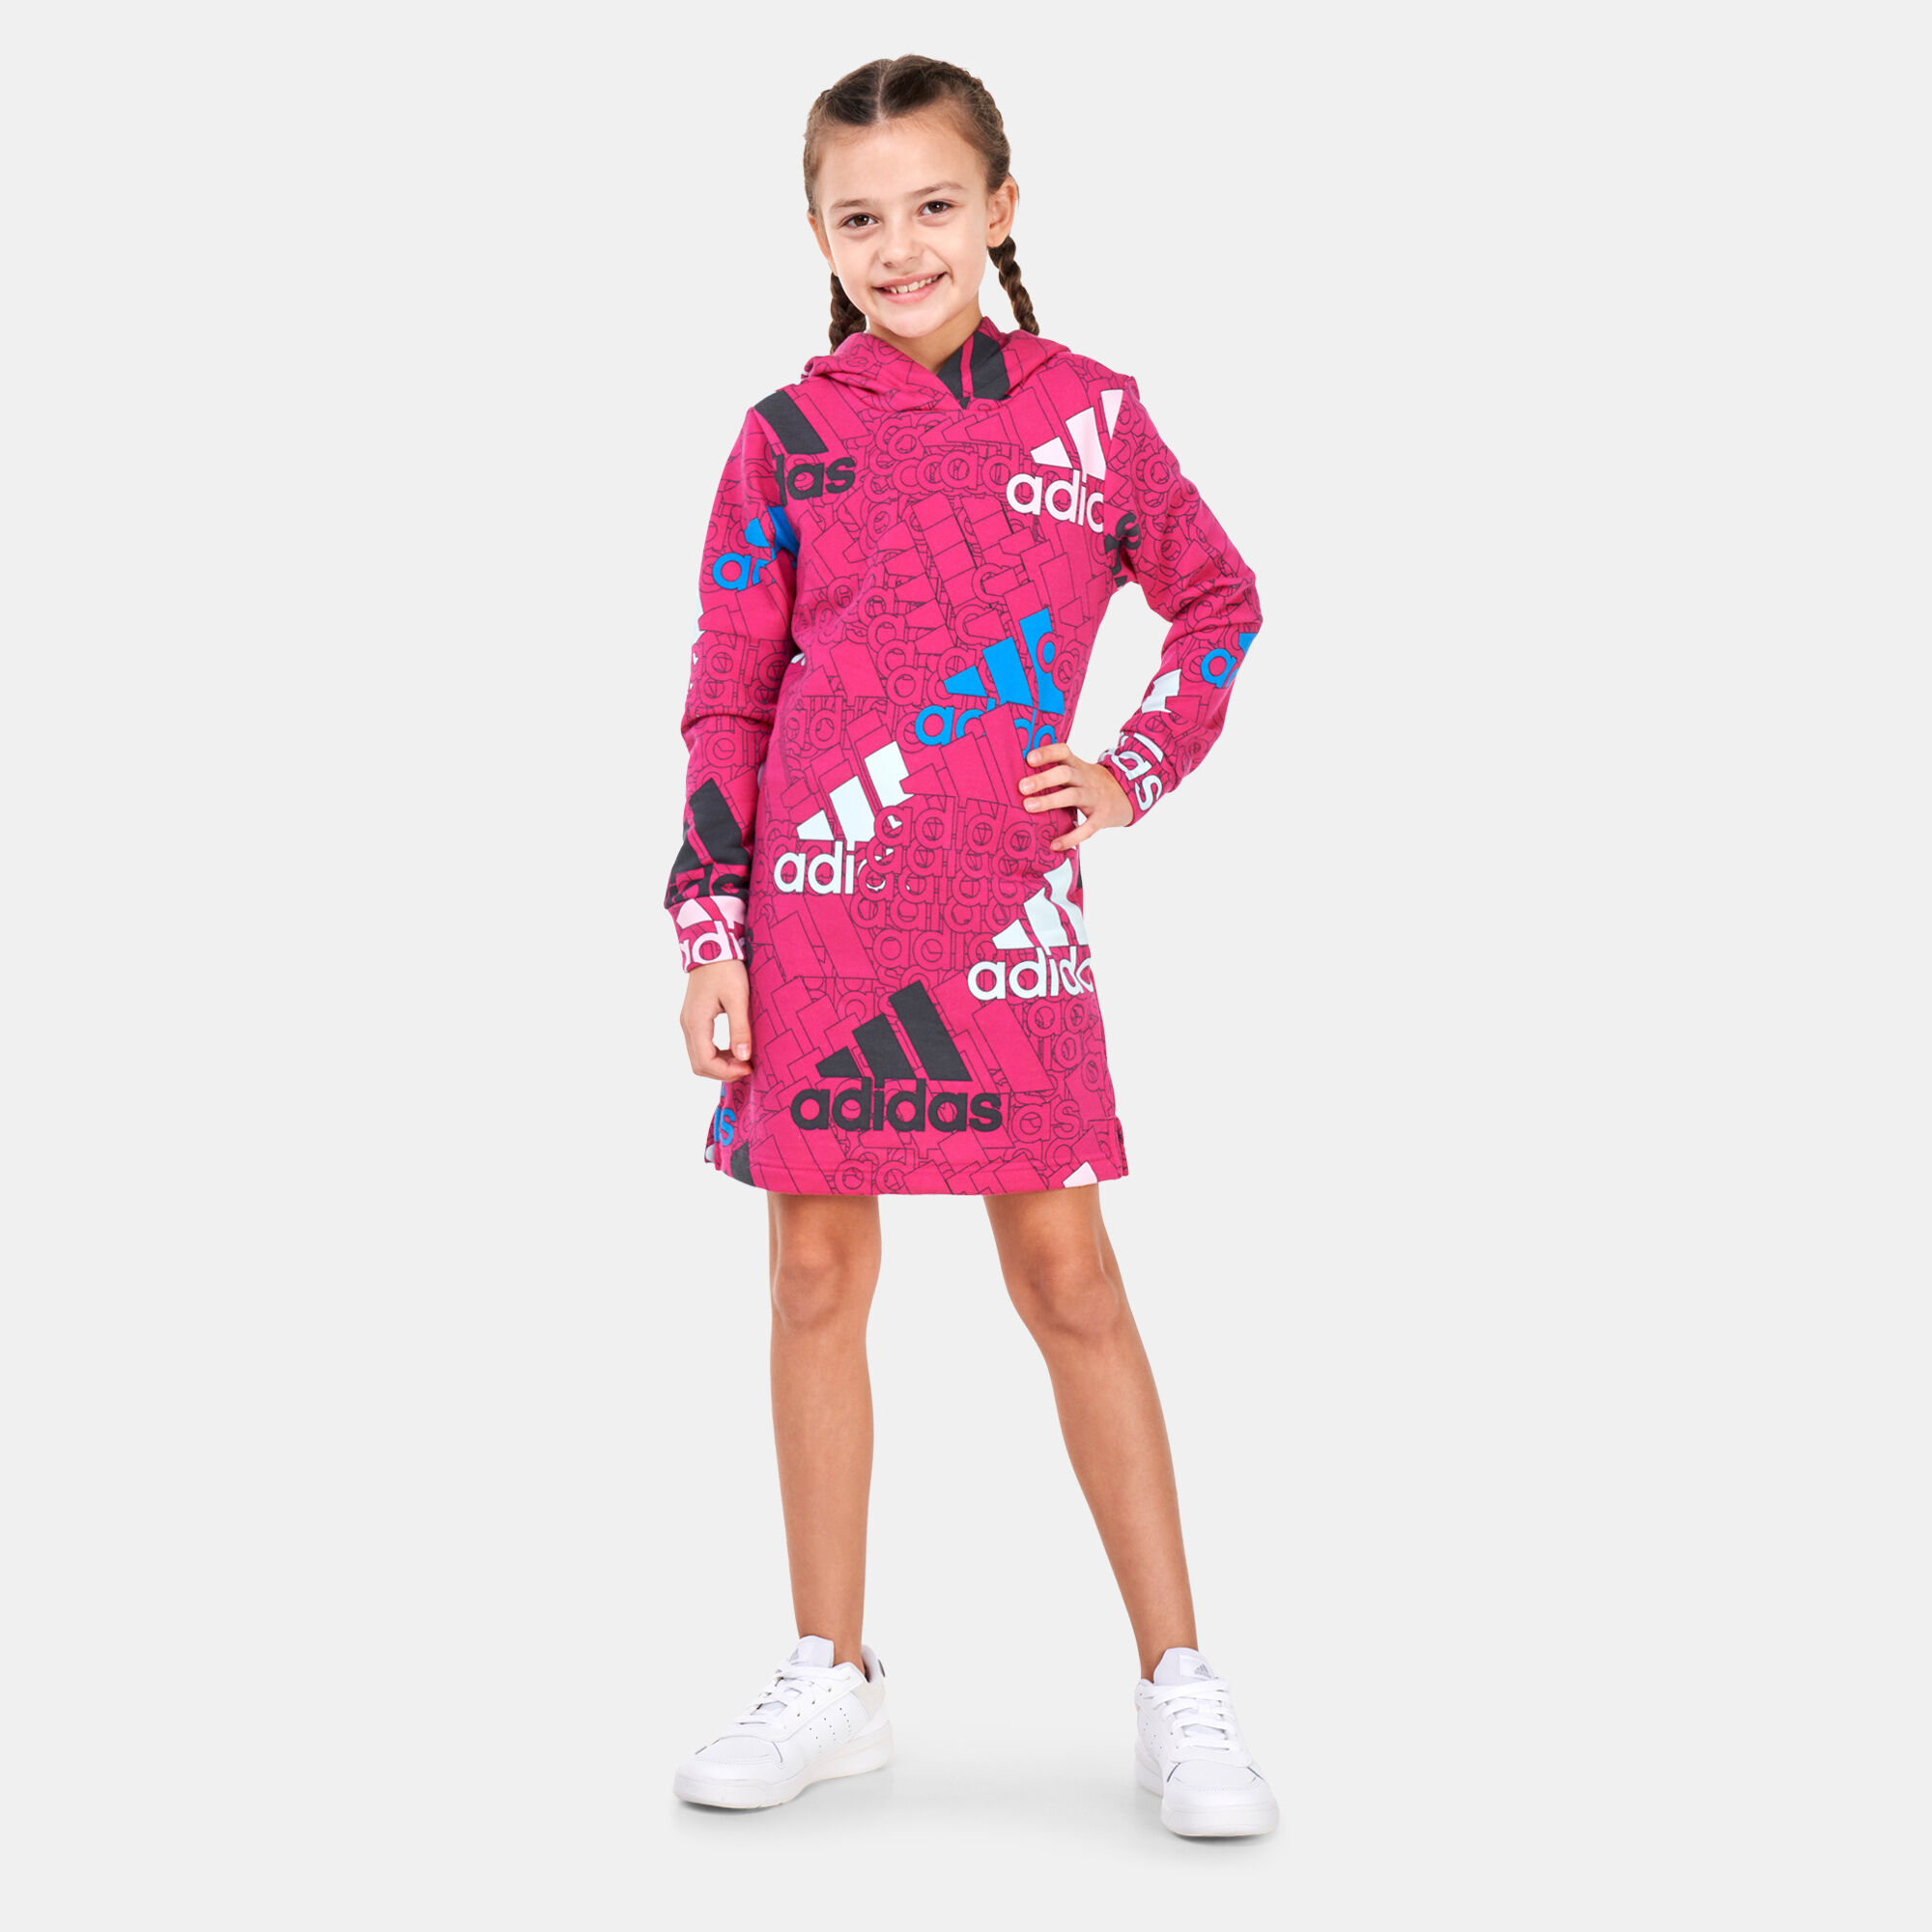 Kids\' Kuwait adidas Red Essentials Brand -SSS Buy Love in Print Hooded Dress